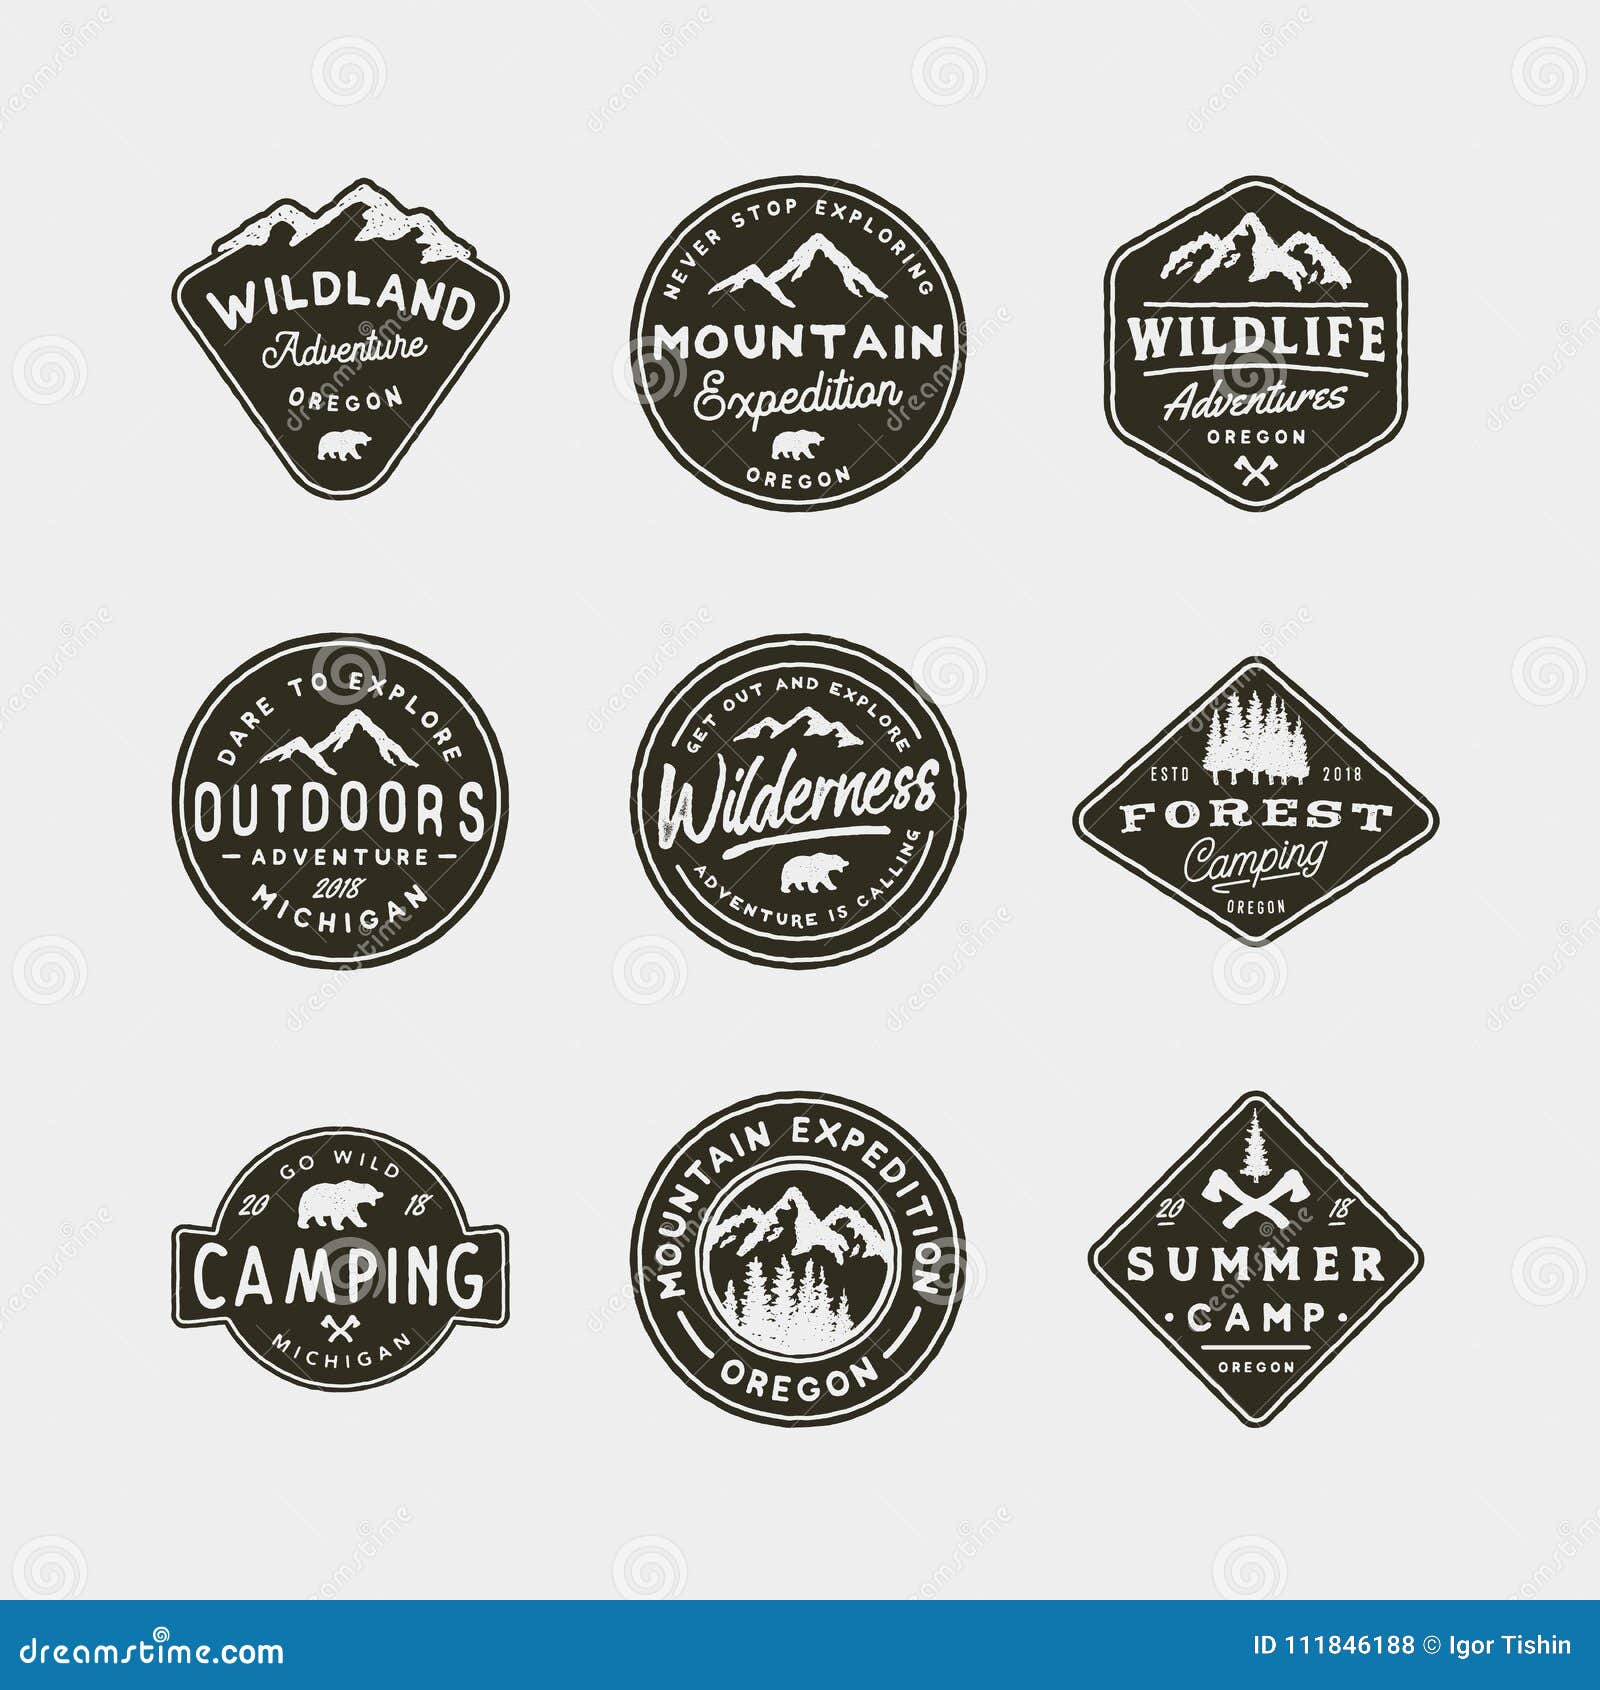 set of vintage wilderness logos. hand drawn retro styled outdoor adventure emblems.  